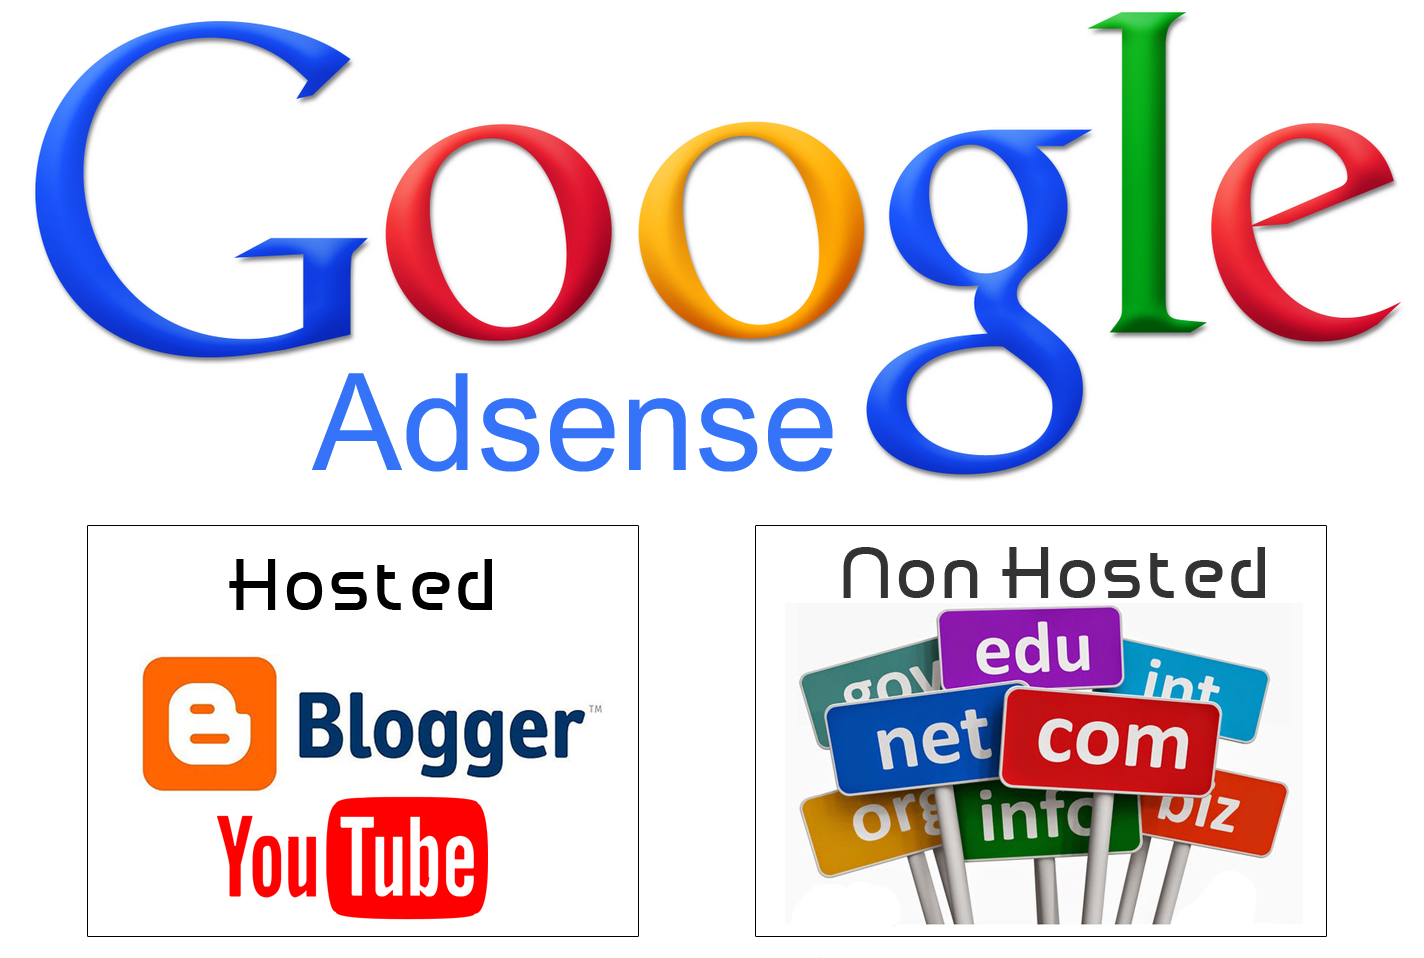 Google hosting. Гугл адсенс. Adsense. Адсенс. Google approved.